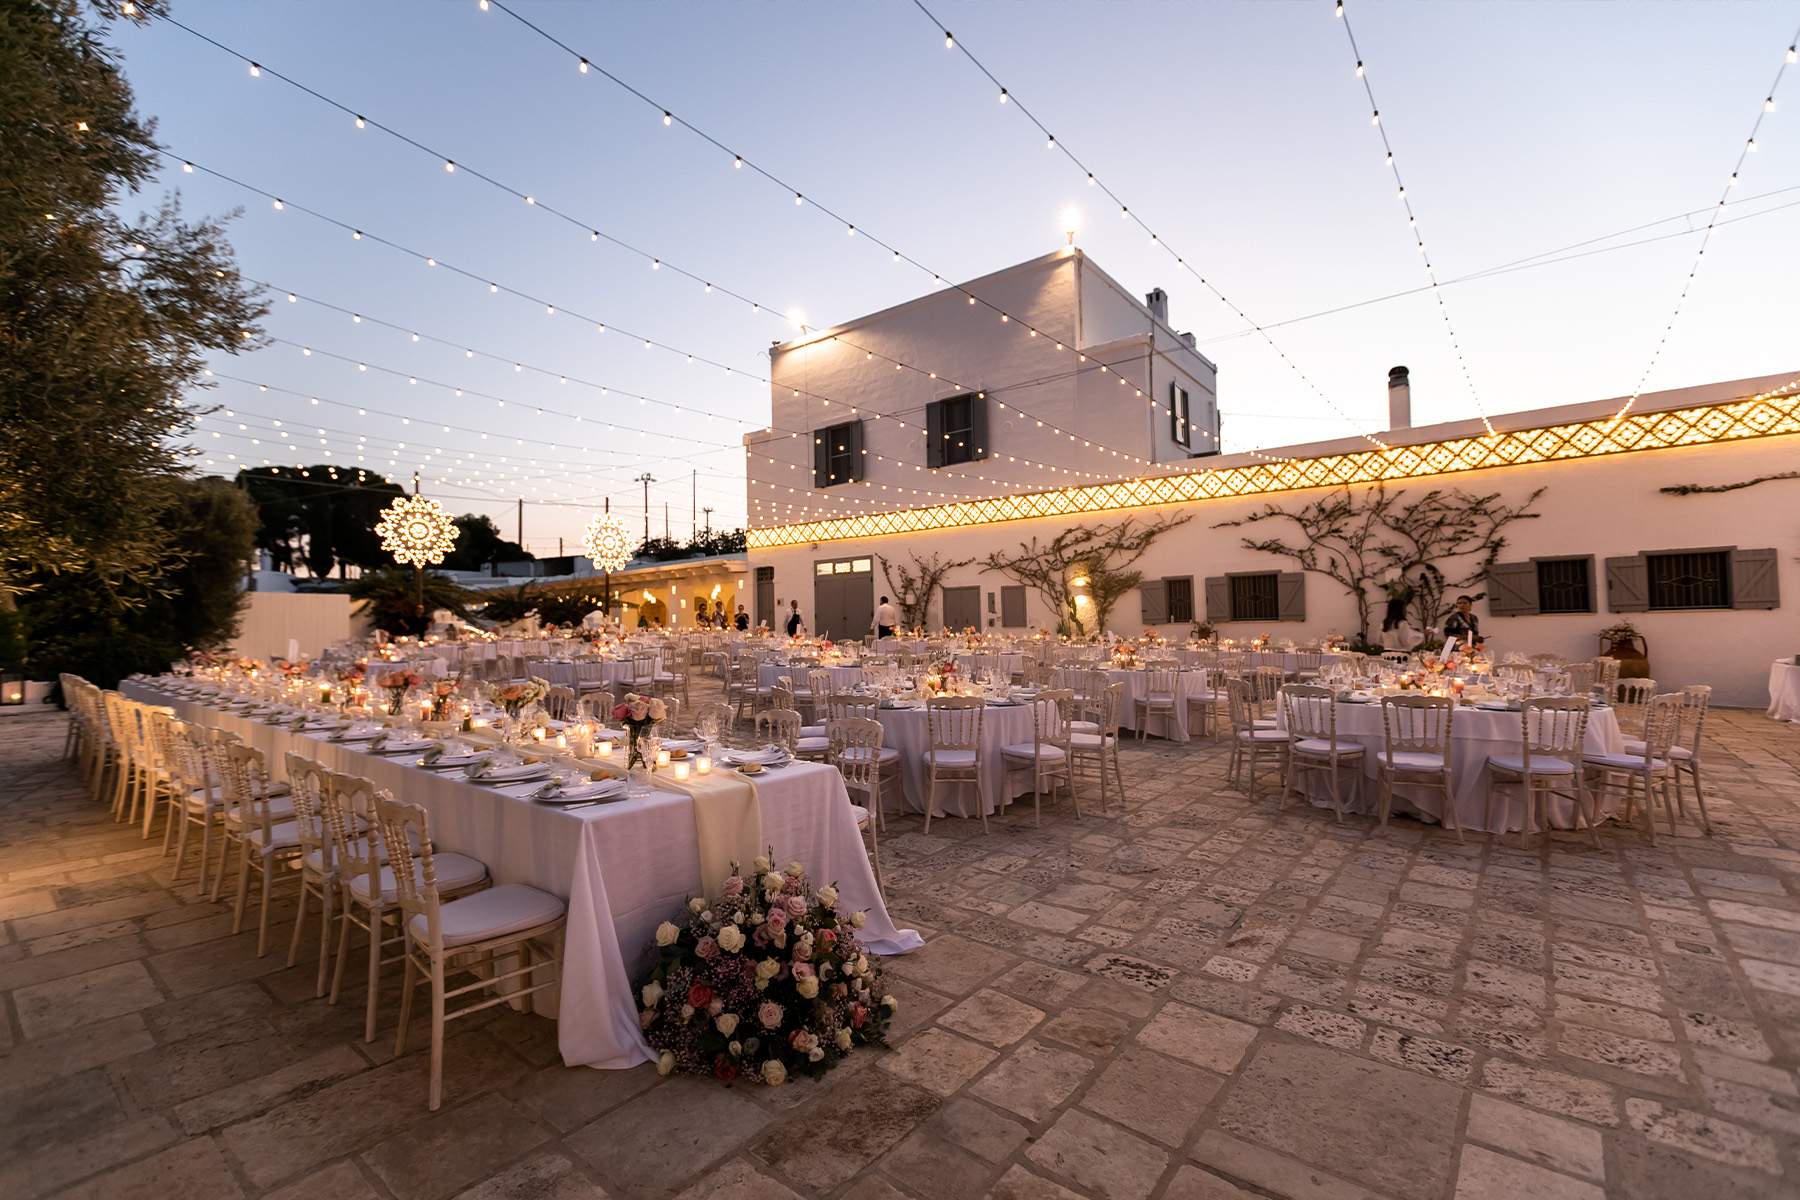 Masseria San Nicola - Location per matrimoni in Salento - Elisabetta D'Ambrogio wedding planner